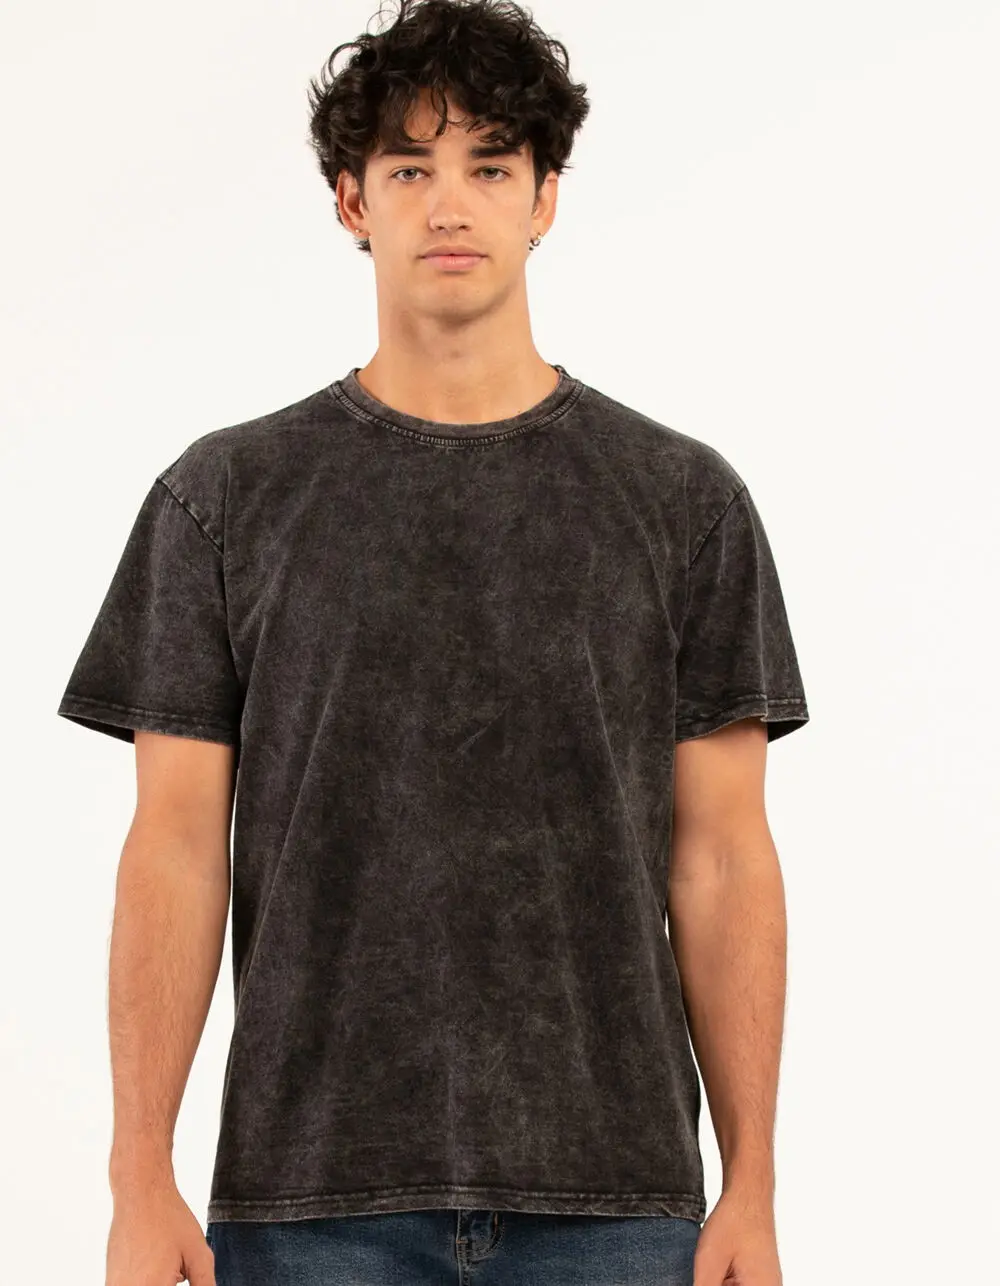 नई शैली कस्टम एसिड धोने टी शर्ट निर्माता सस्ते दाम कम आस्तीन सांस एसिड धोने टी शर्ट